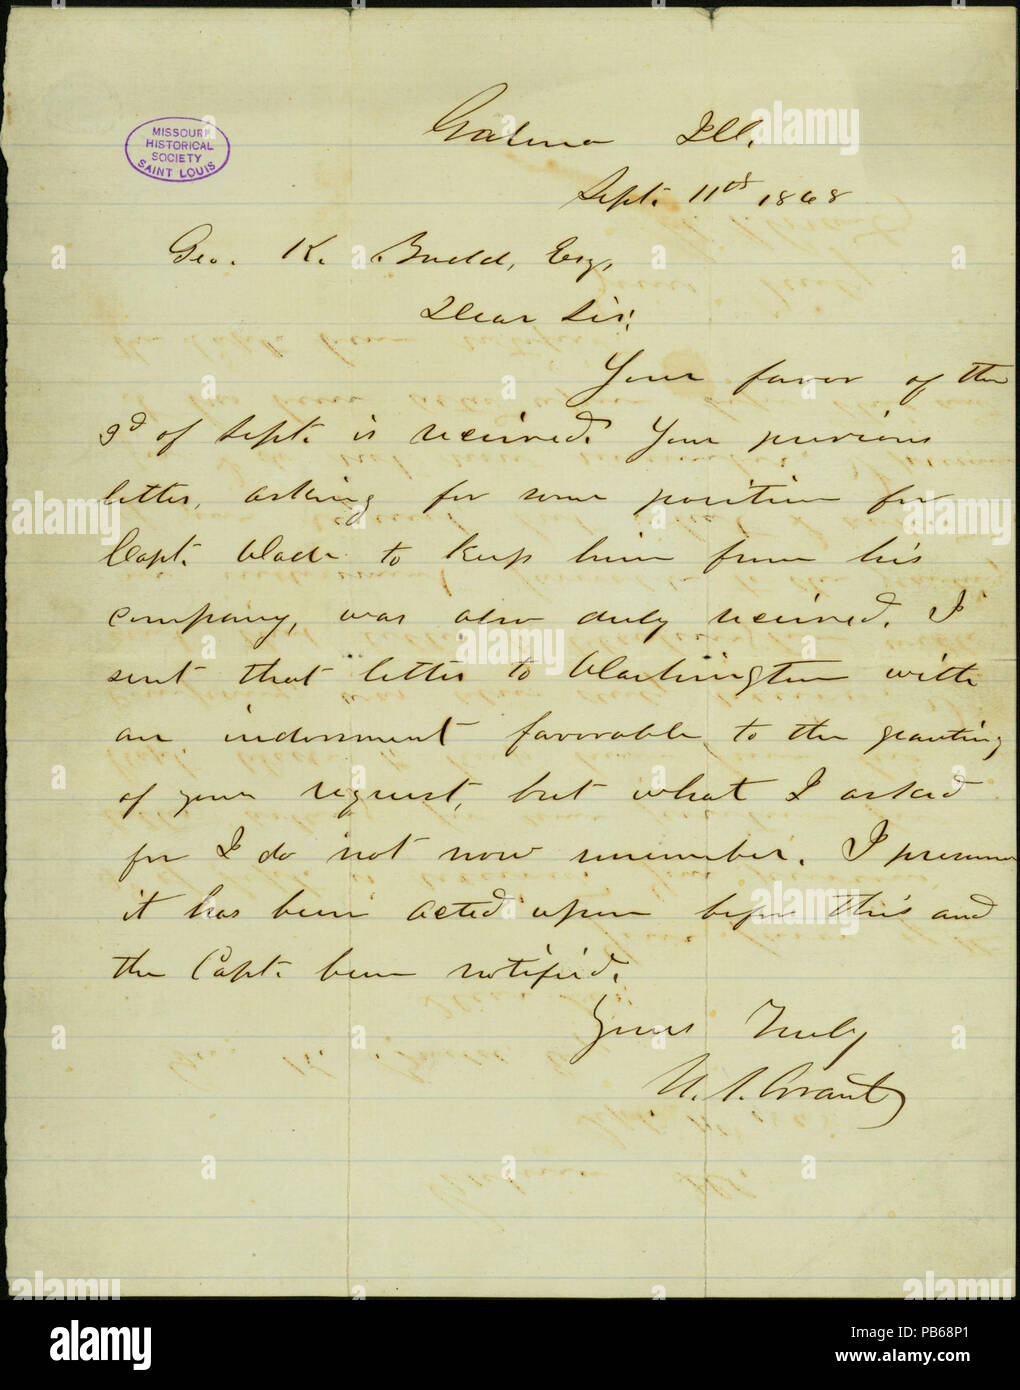 913 Letter signed U.S. Grant, Galena, Ill., to Geo. K. Budd (George K. Budd), September 11, 1868 Stock Photo